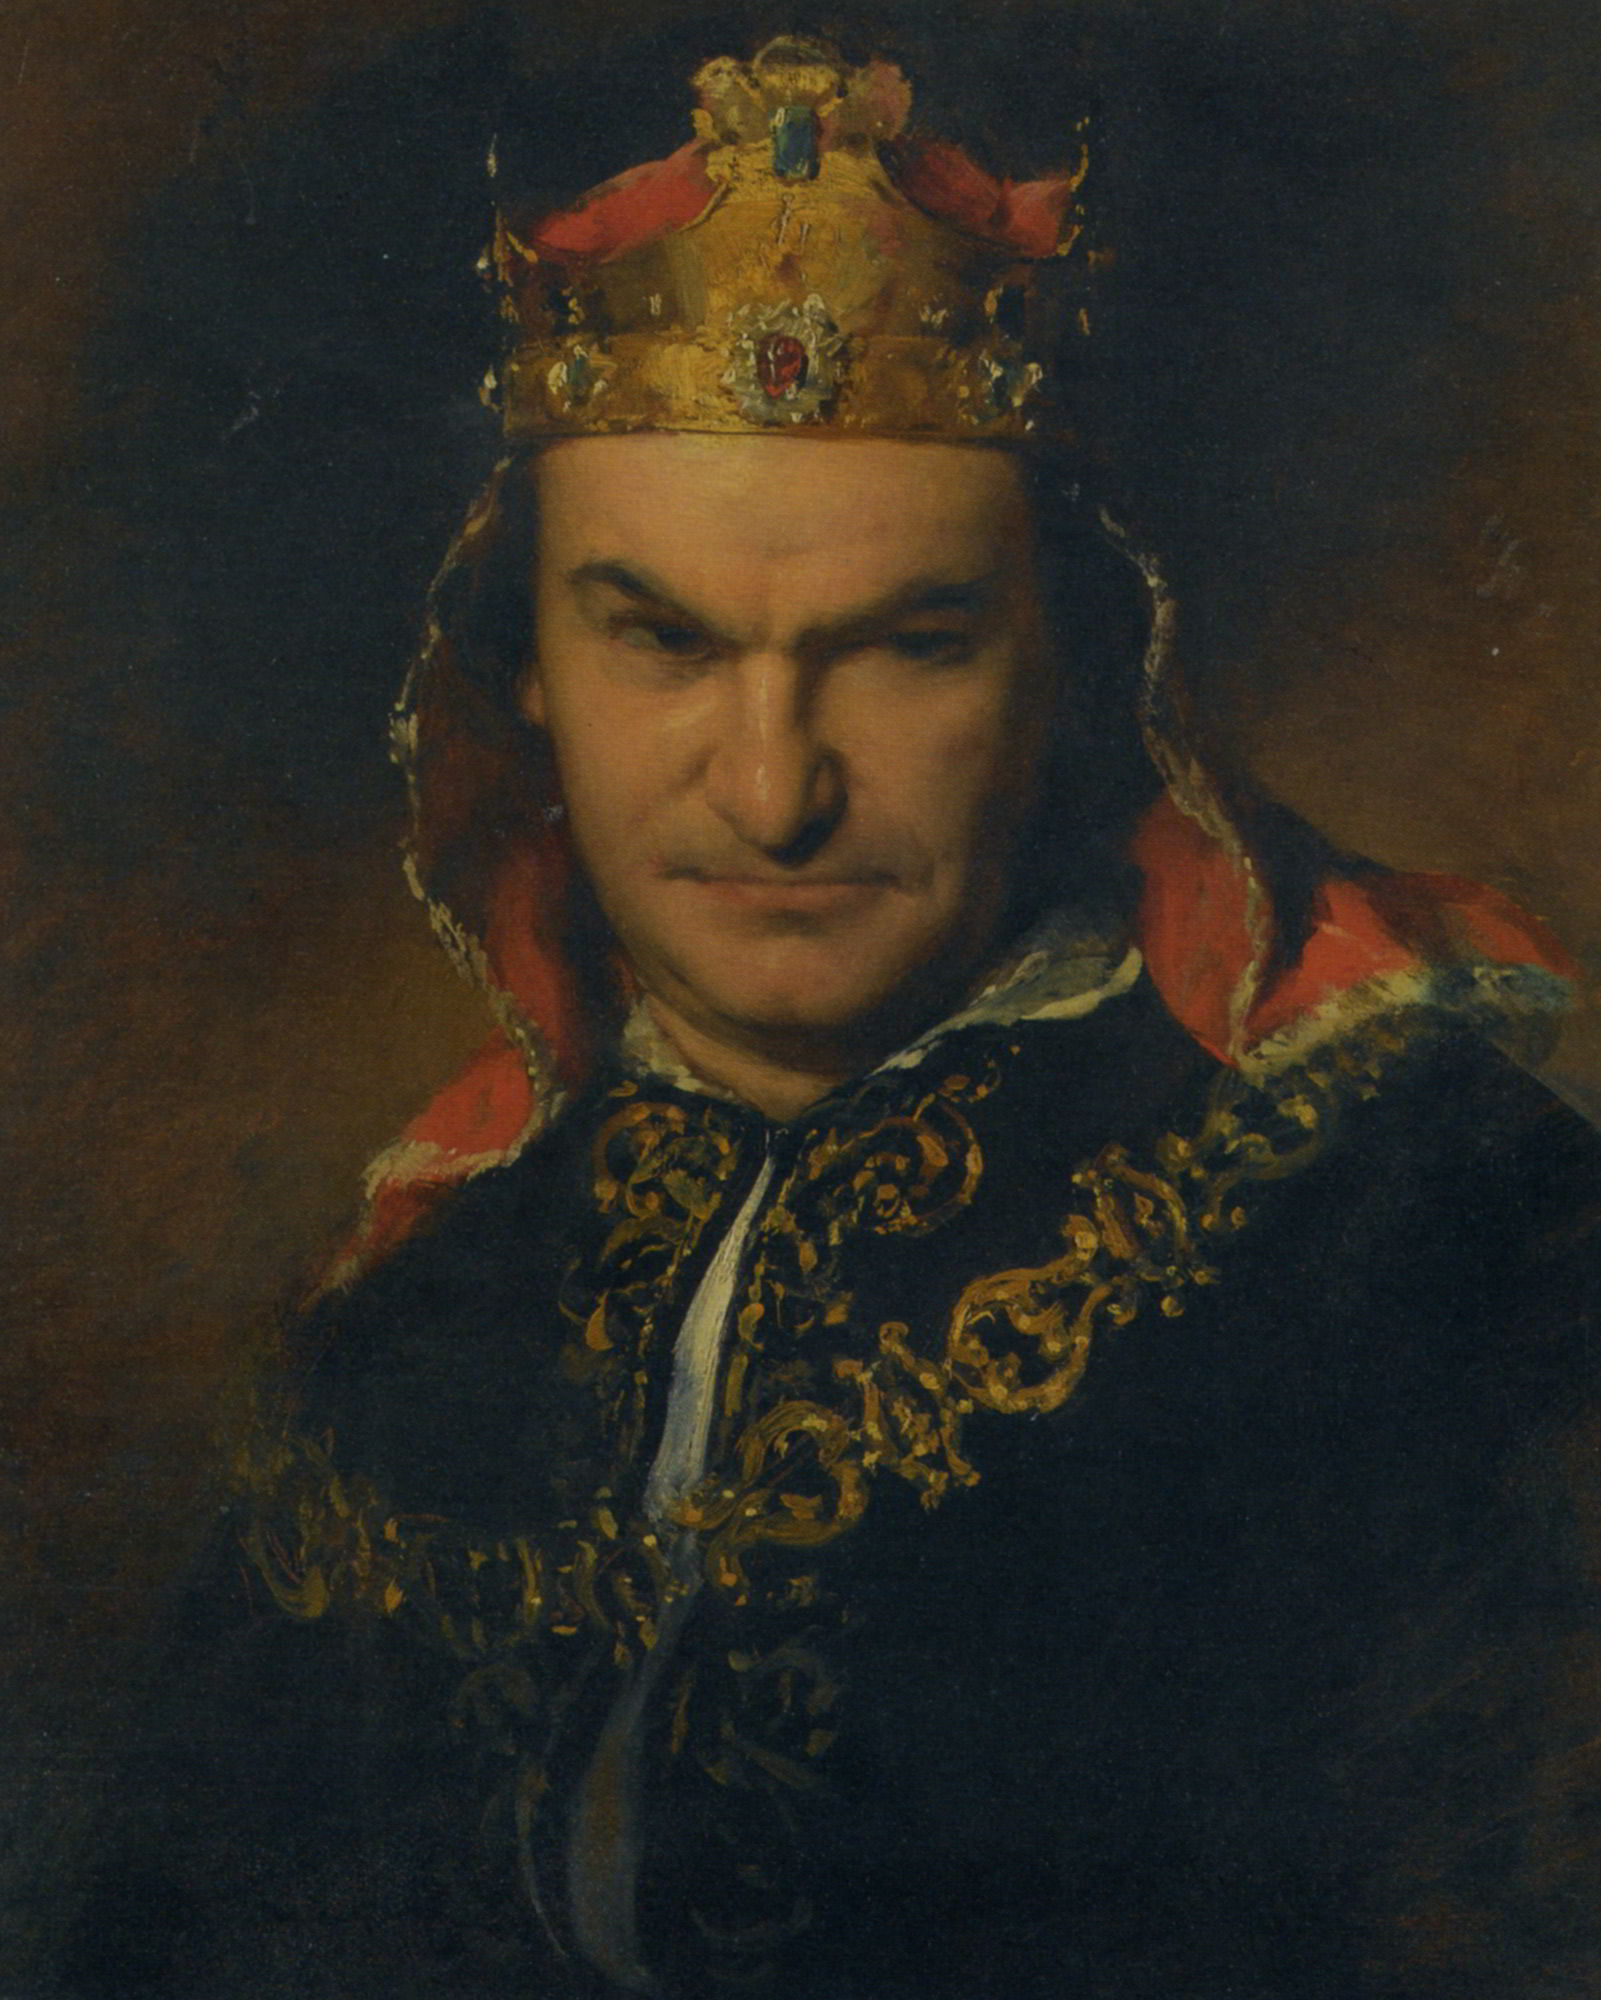 Portrait of the actor Bogumil Dawson as Richard III by Friedrich von Amerling